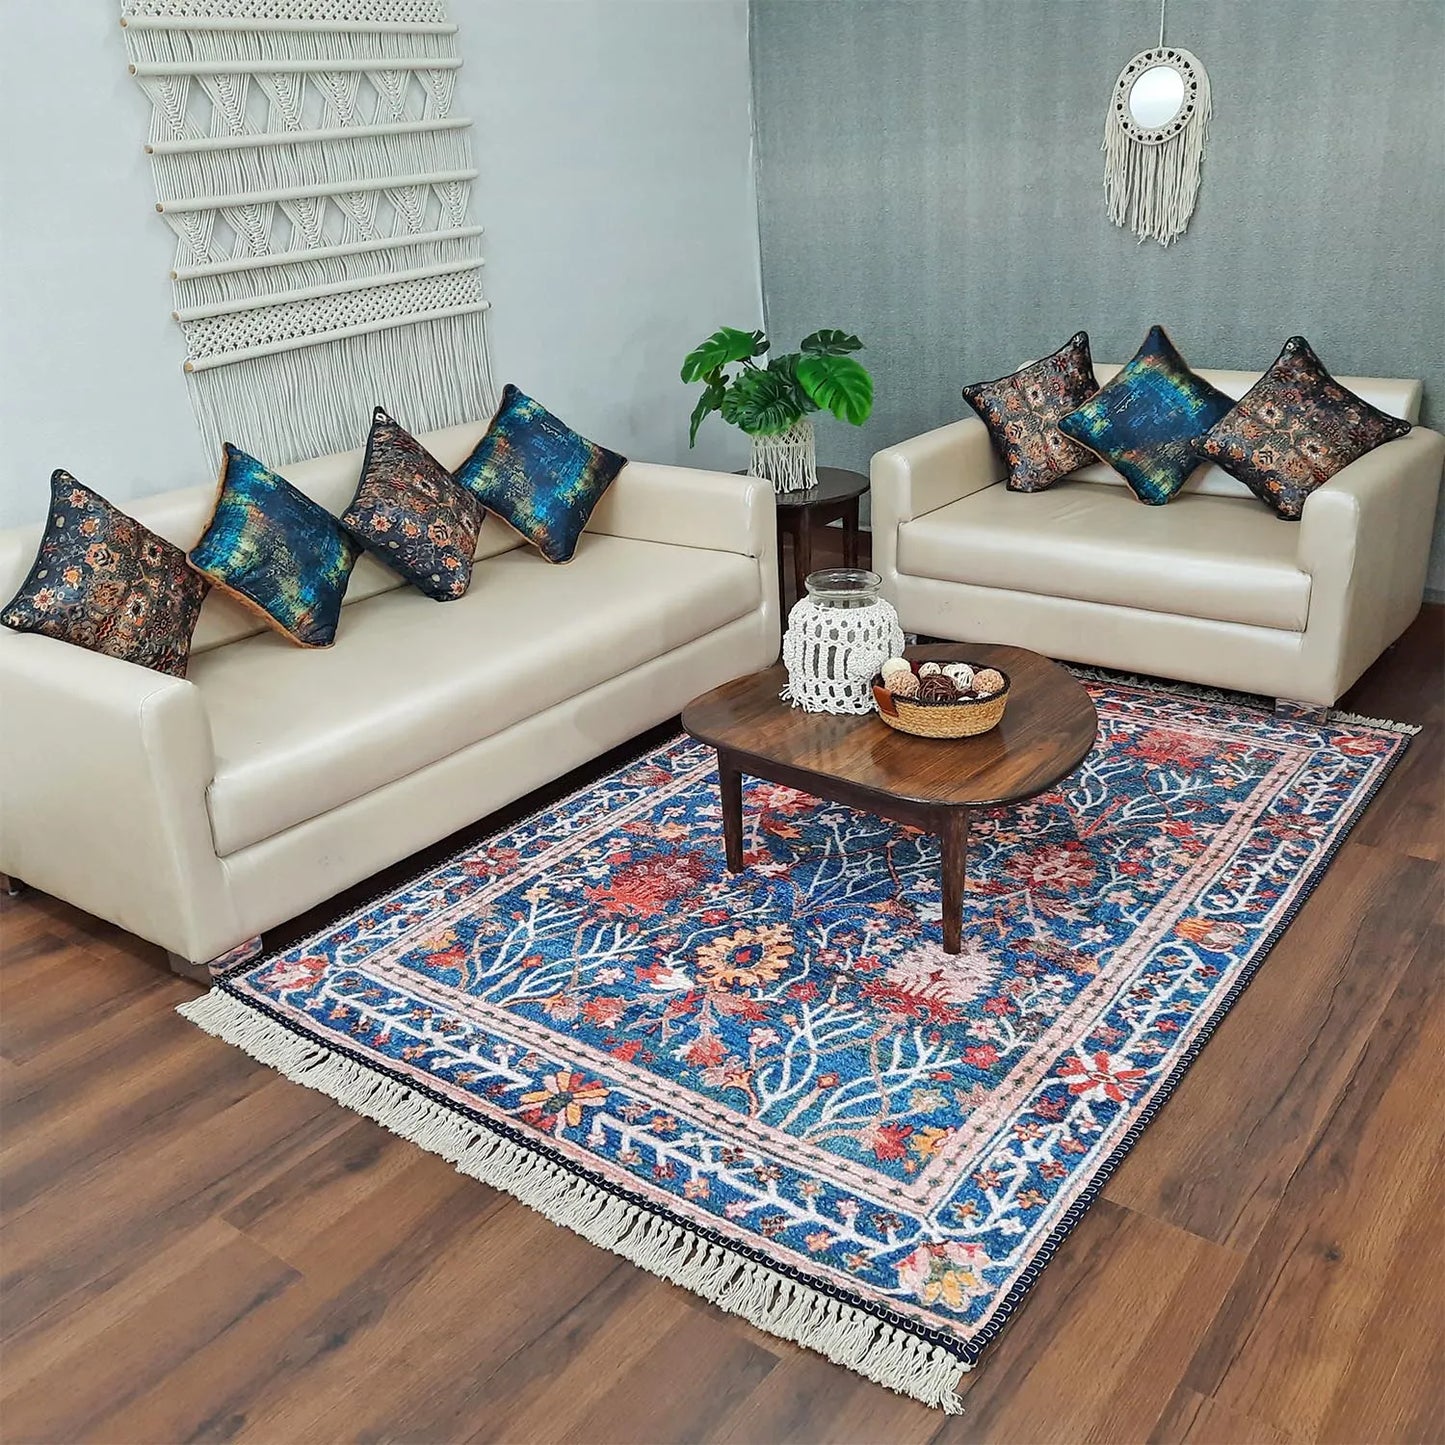 Avioni Home Persian Carpet – Floral Design – Faux Silk Living Room Rug